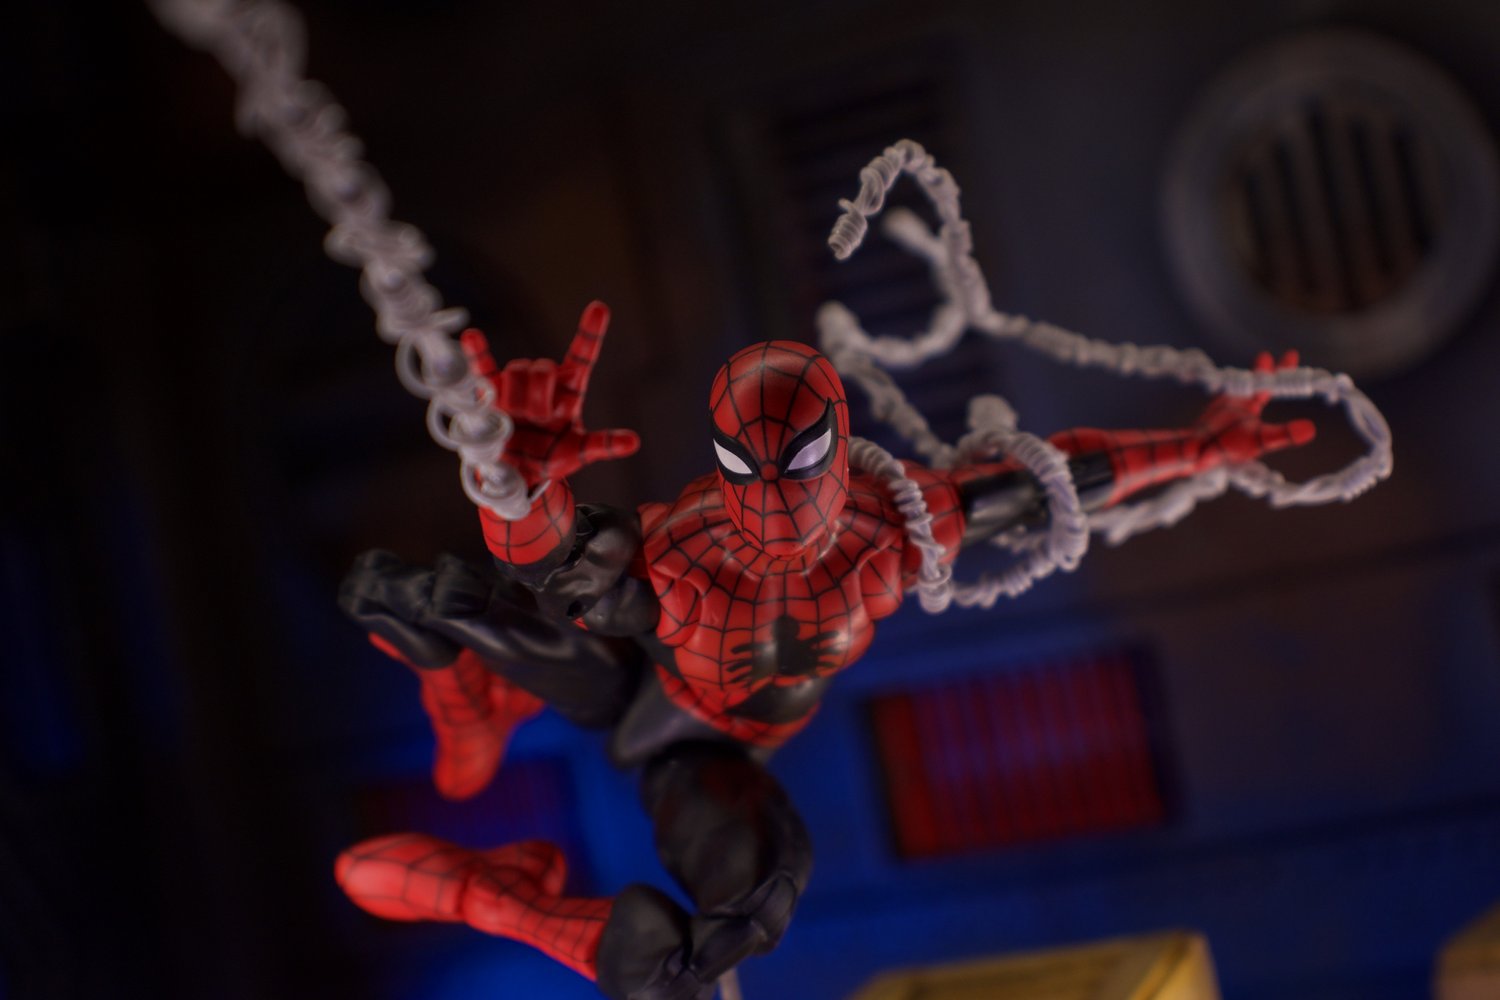 Marvel Legends: Amazing Fantasy Spider-Man